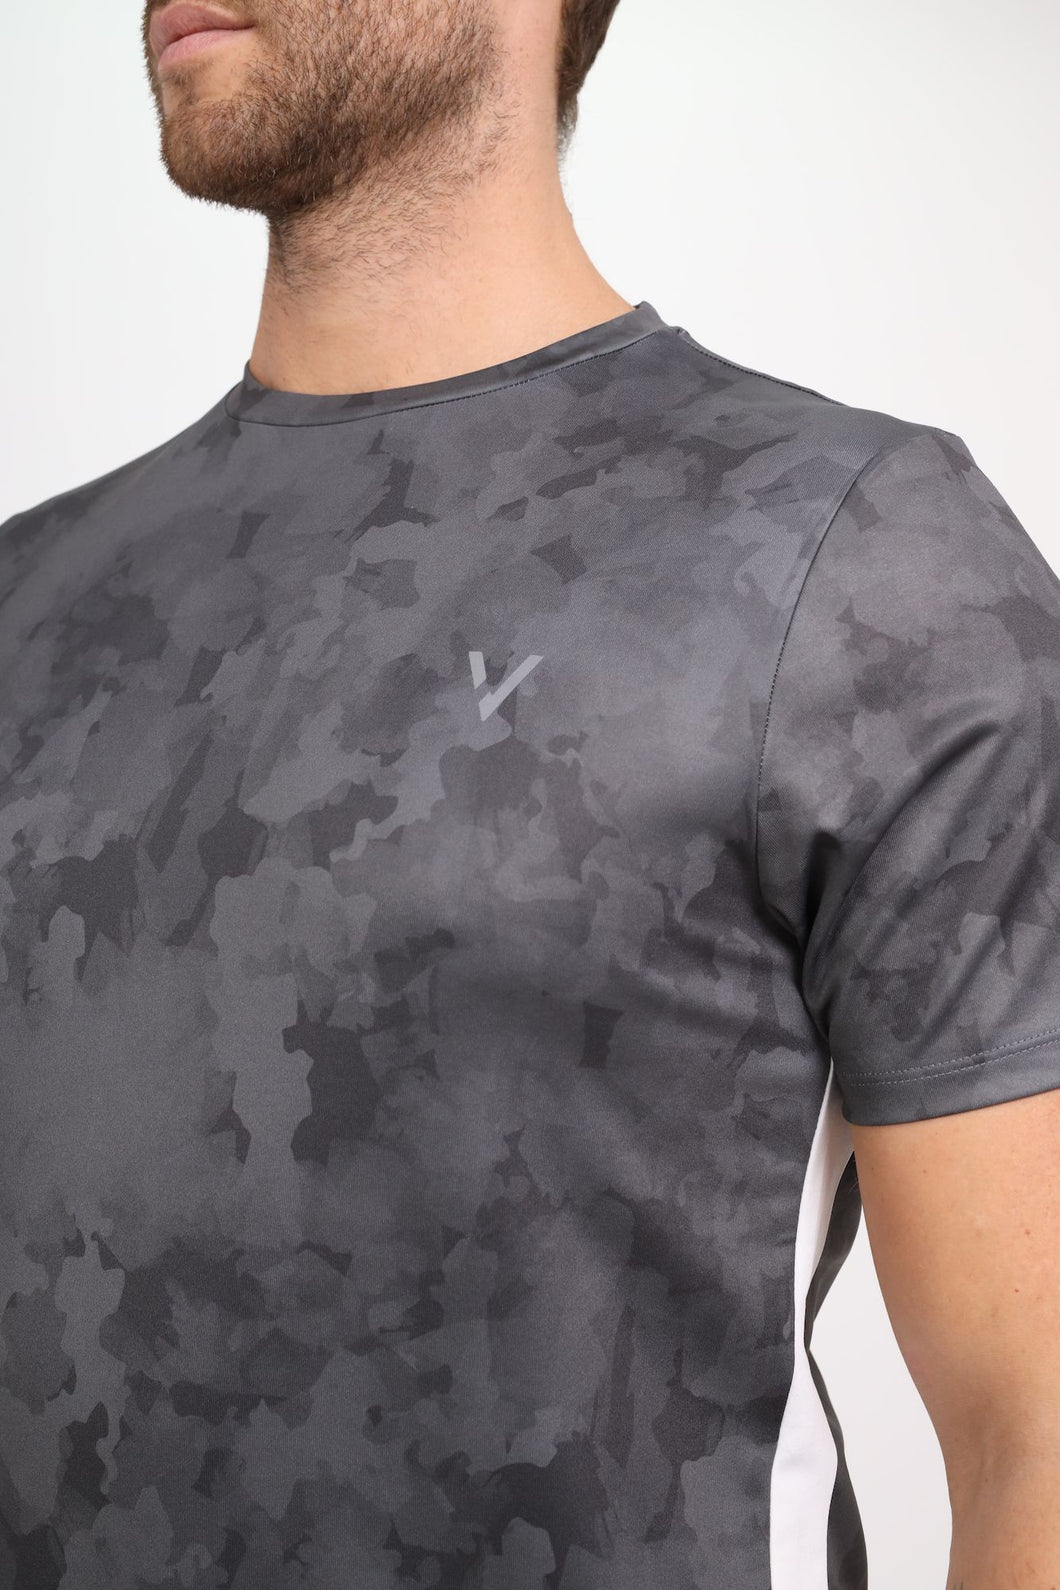 Validate Jed Printed Dri Fit Black Camo T-Shirt